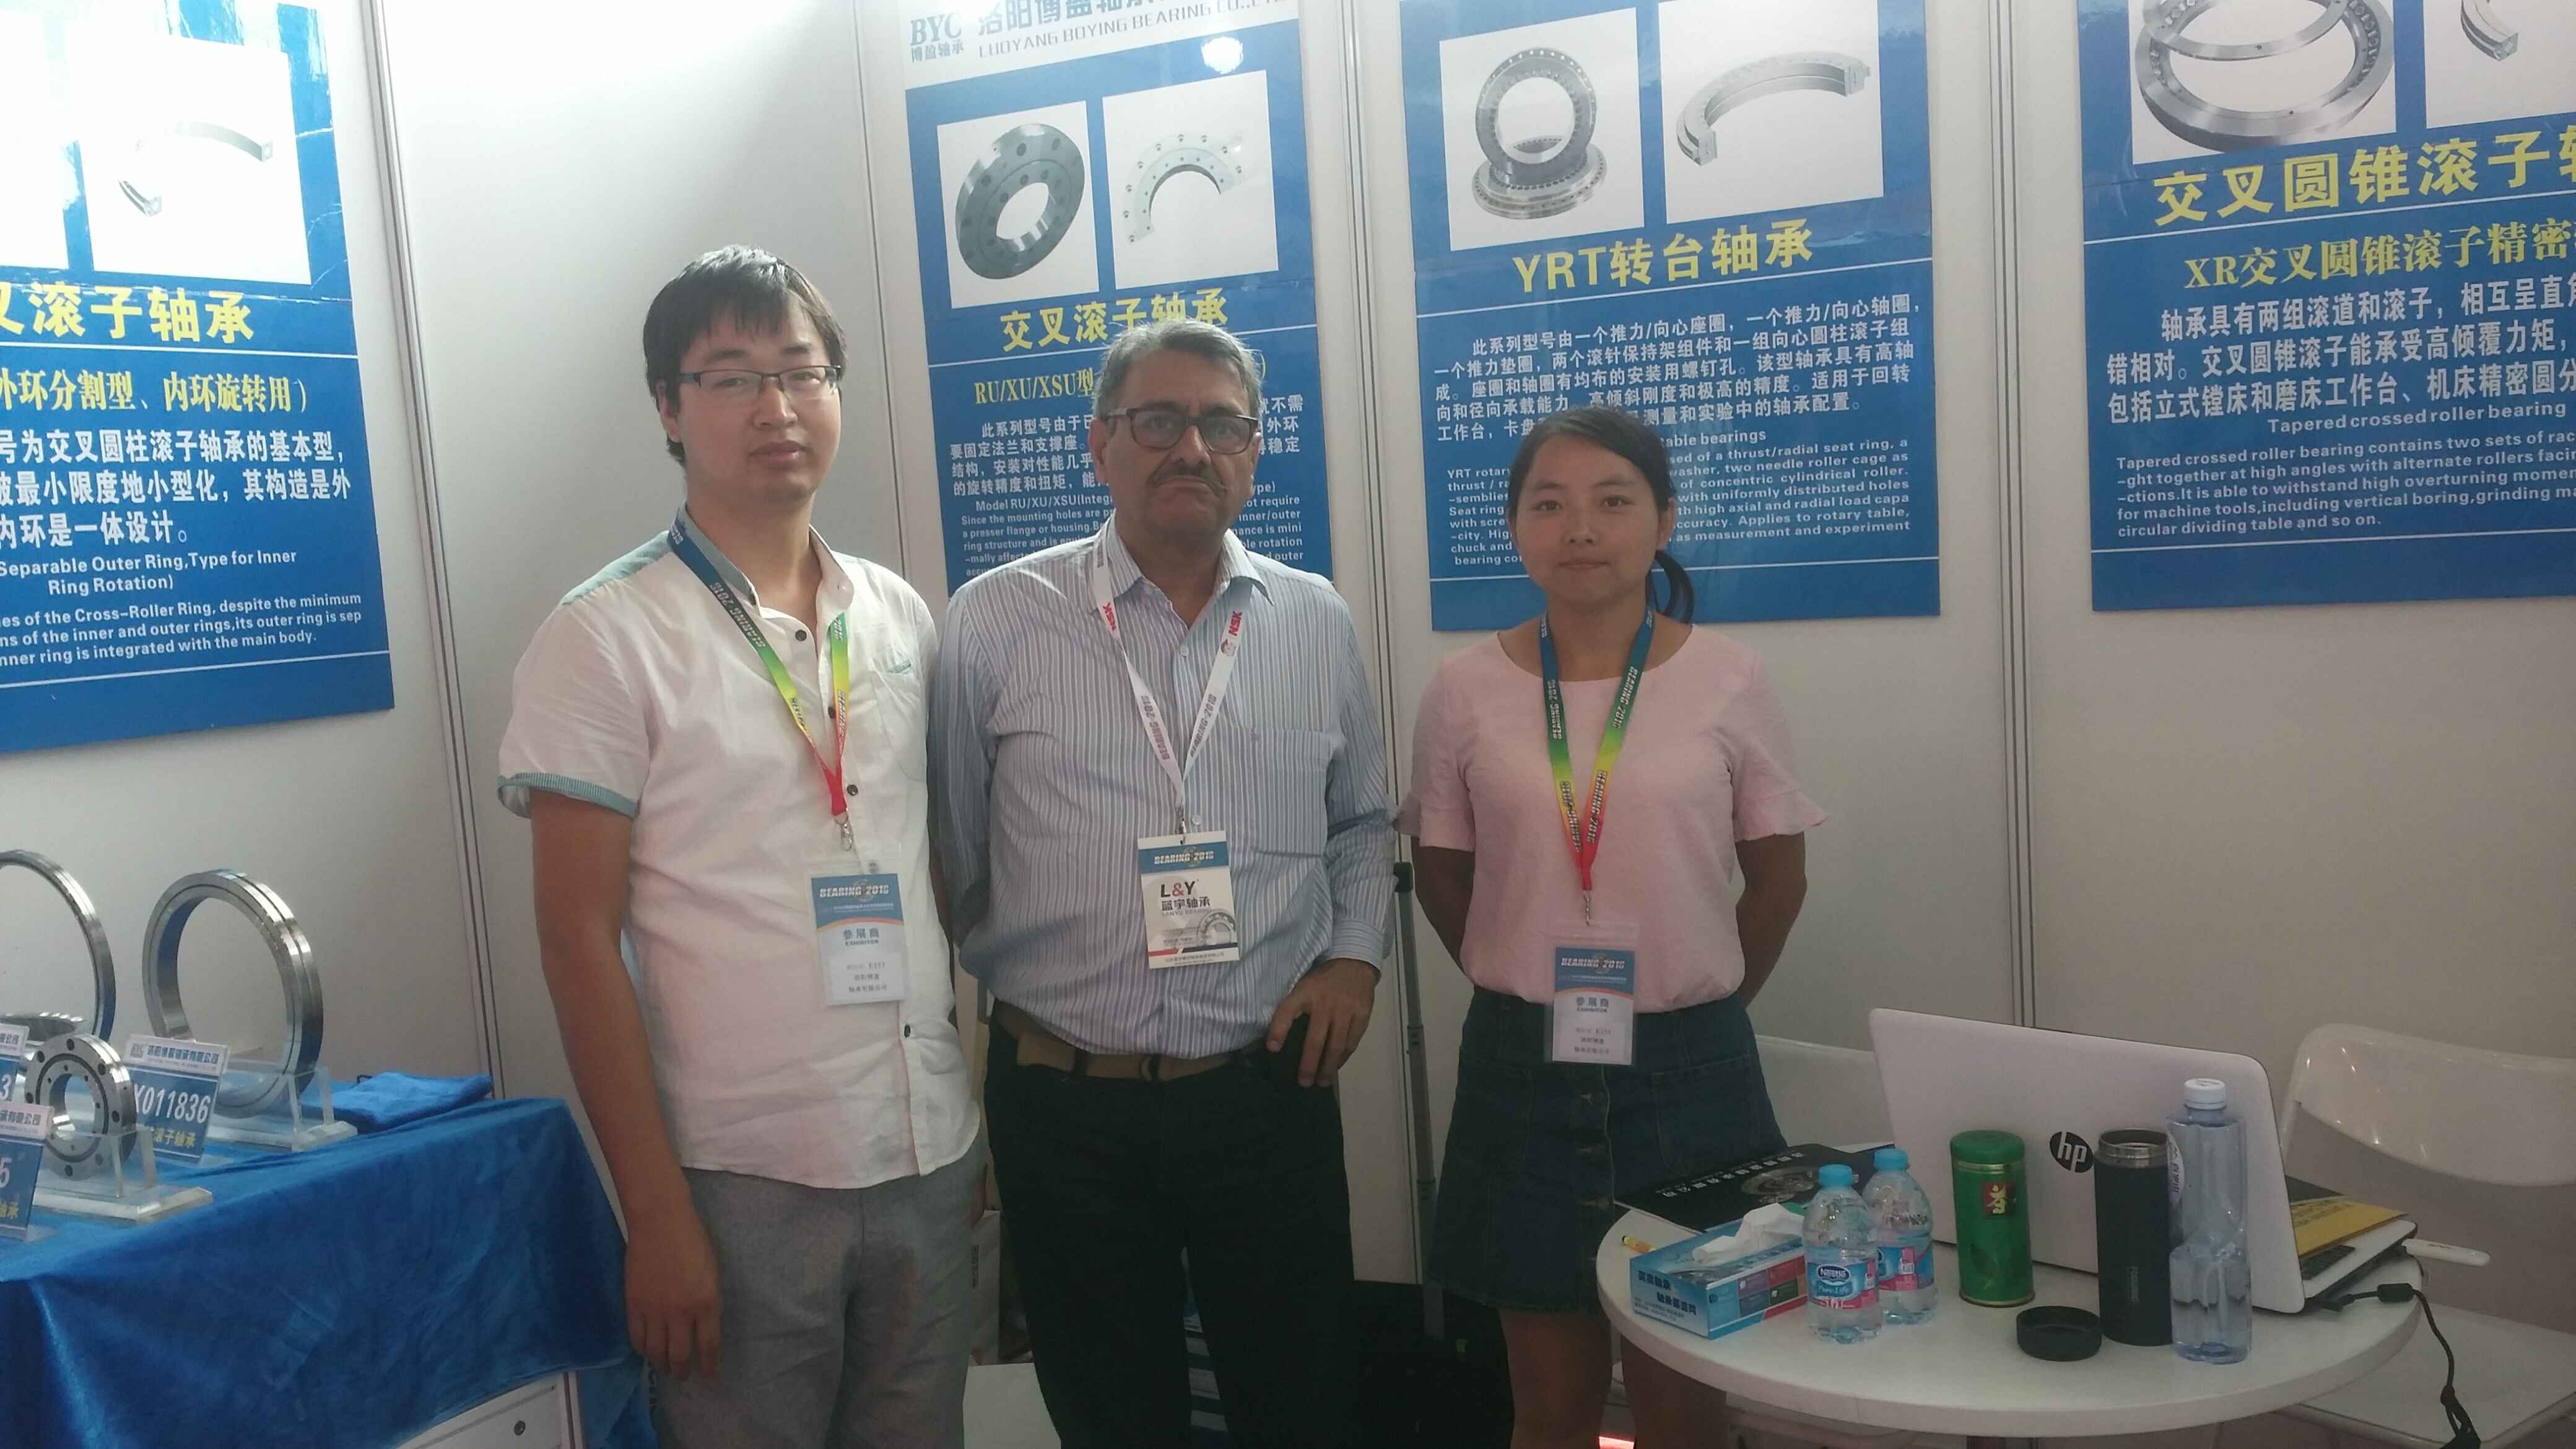 BYC博盈轴承参加2016年9月20-23日上海国际轴承及其专用装备展览会随拍